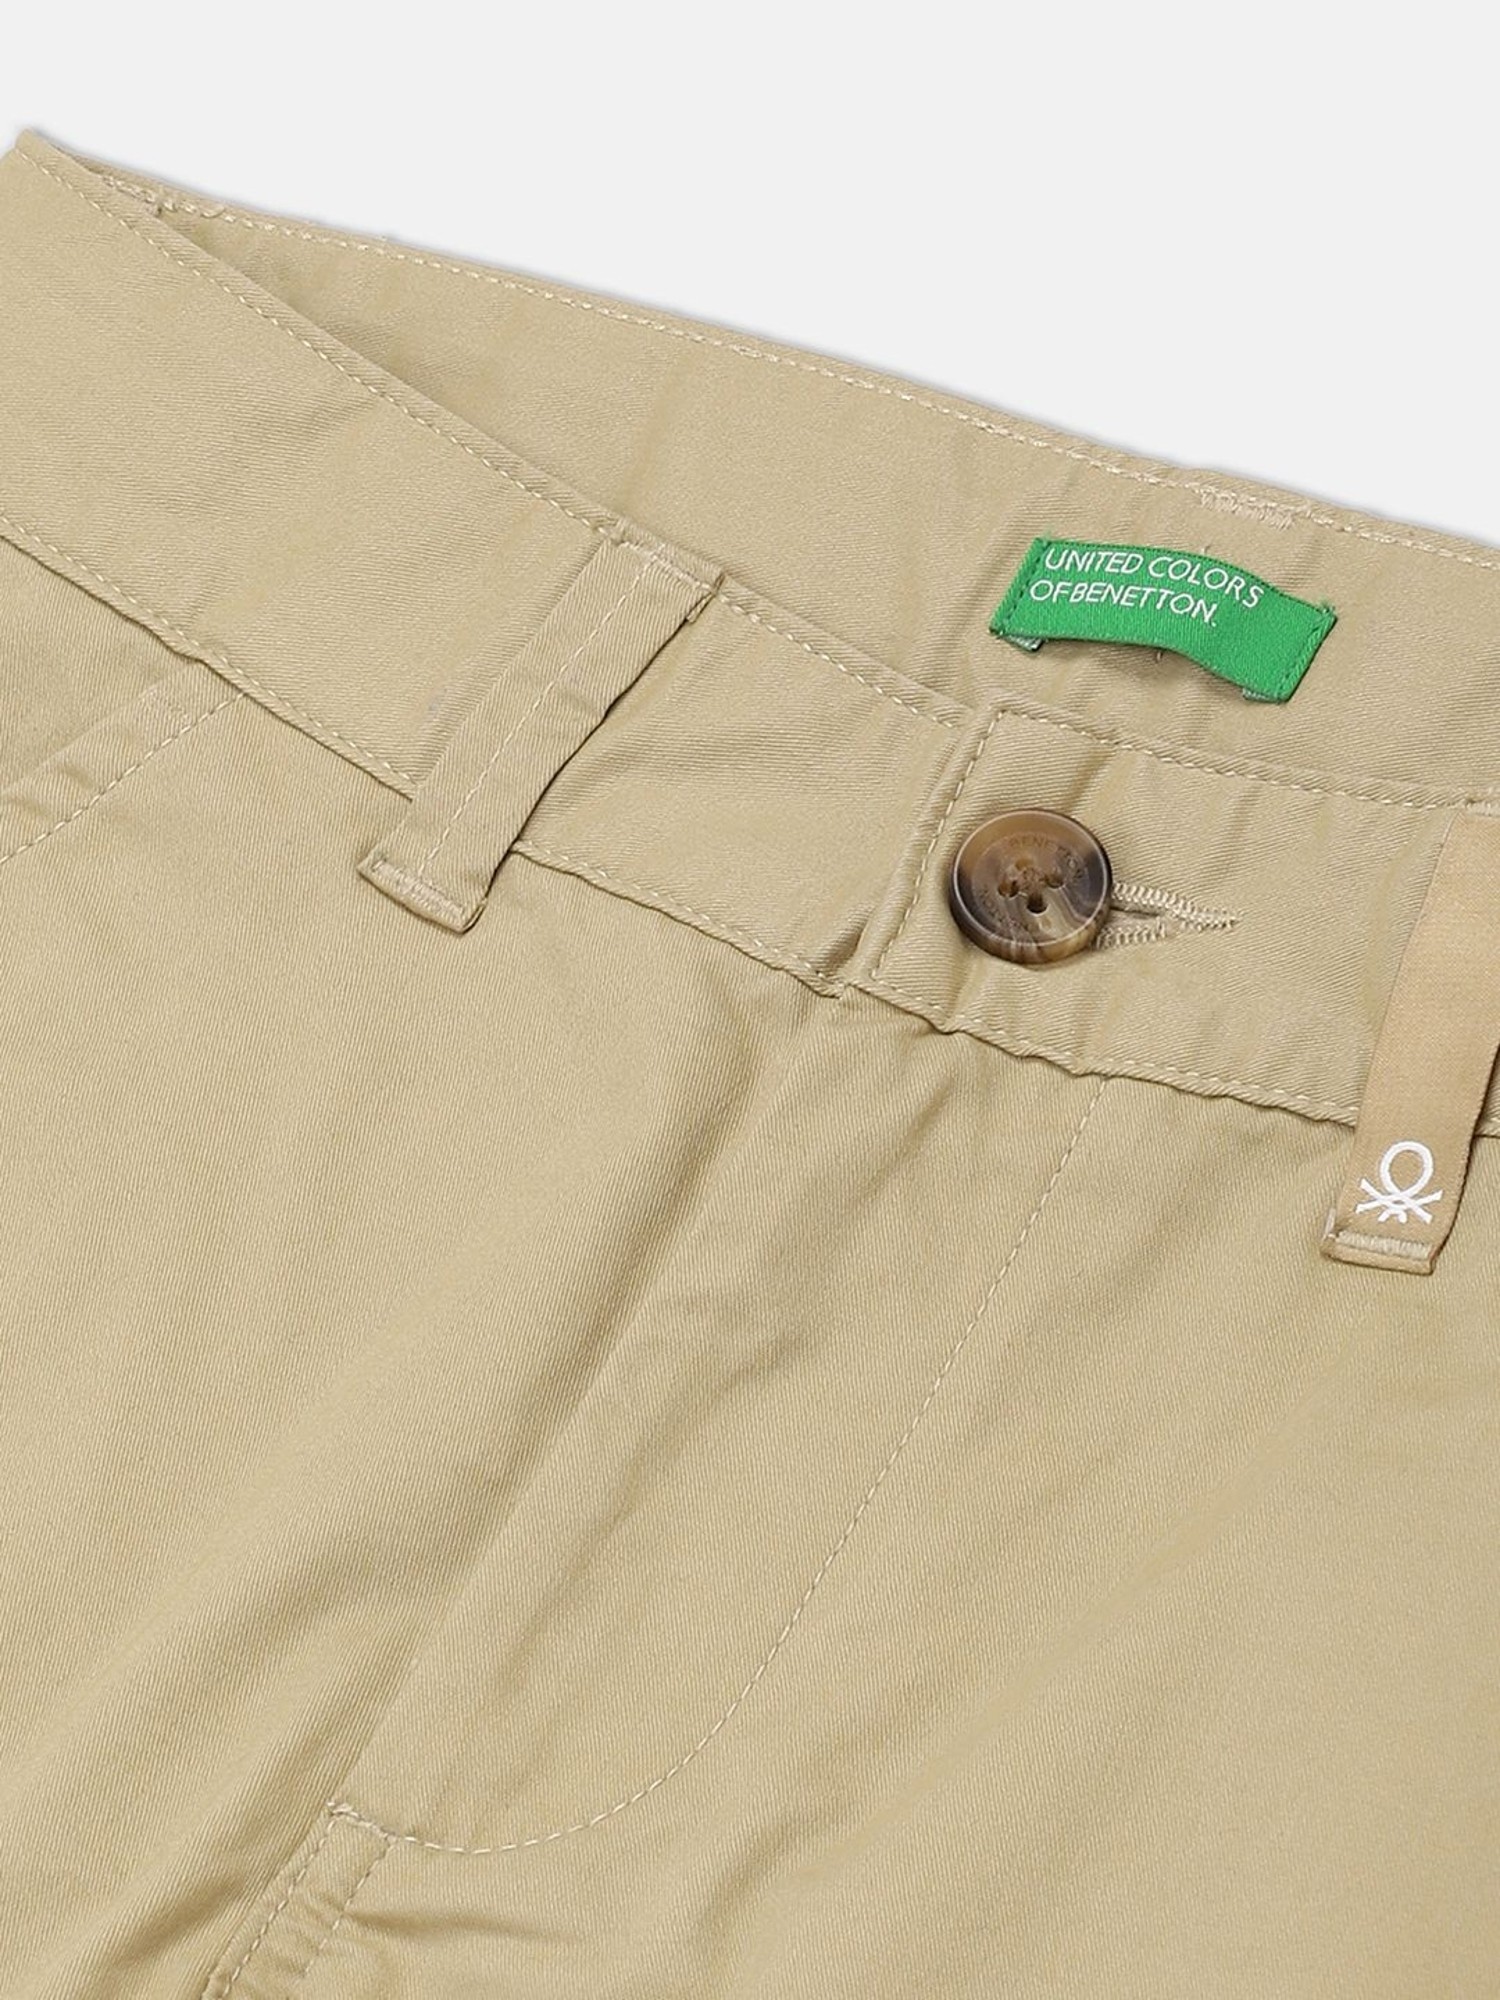 Beige Benetton slacks KIDS FASHION Trousers Basic discount 85% 